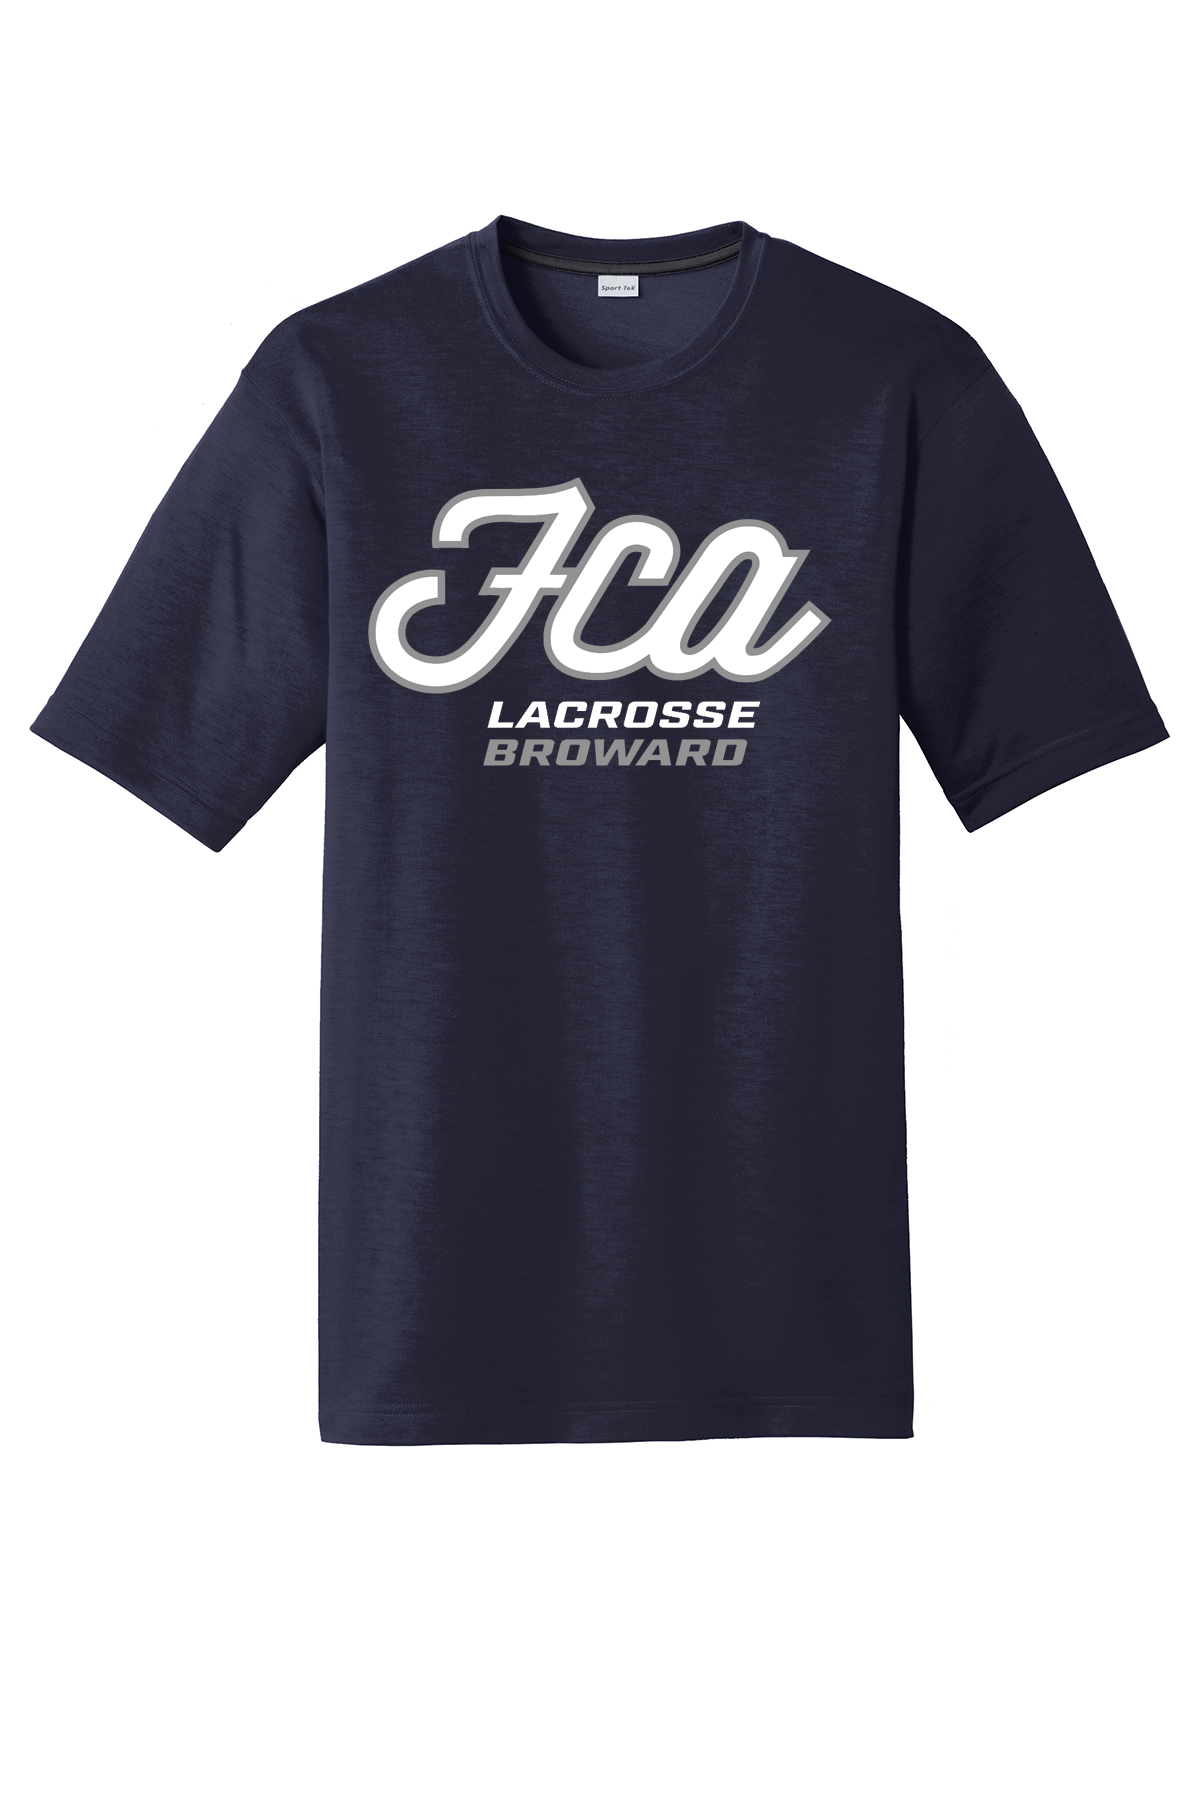 FCA Lacrosse T-Shirt (Navy)